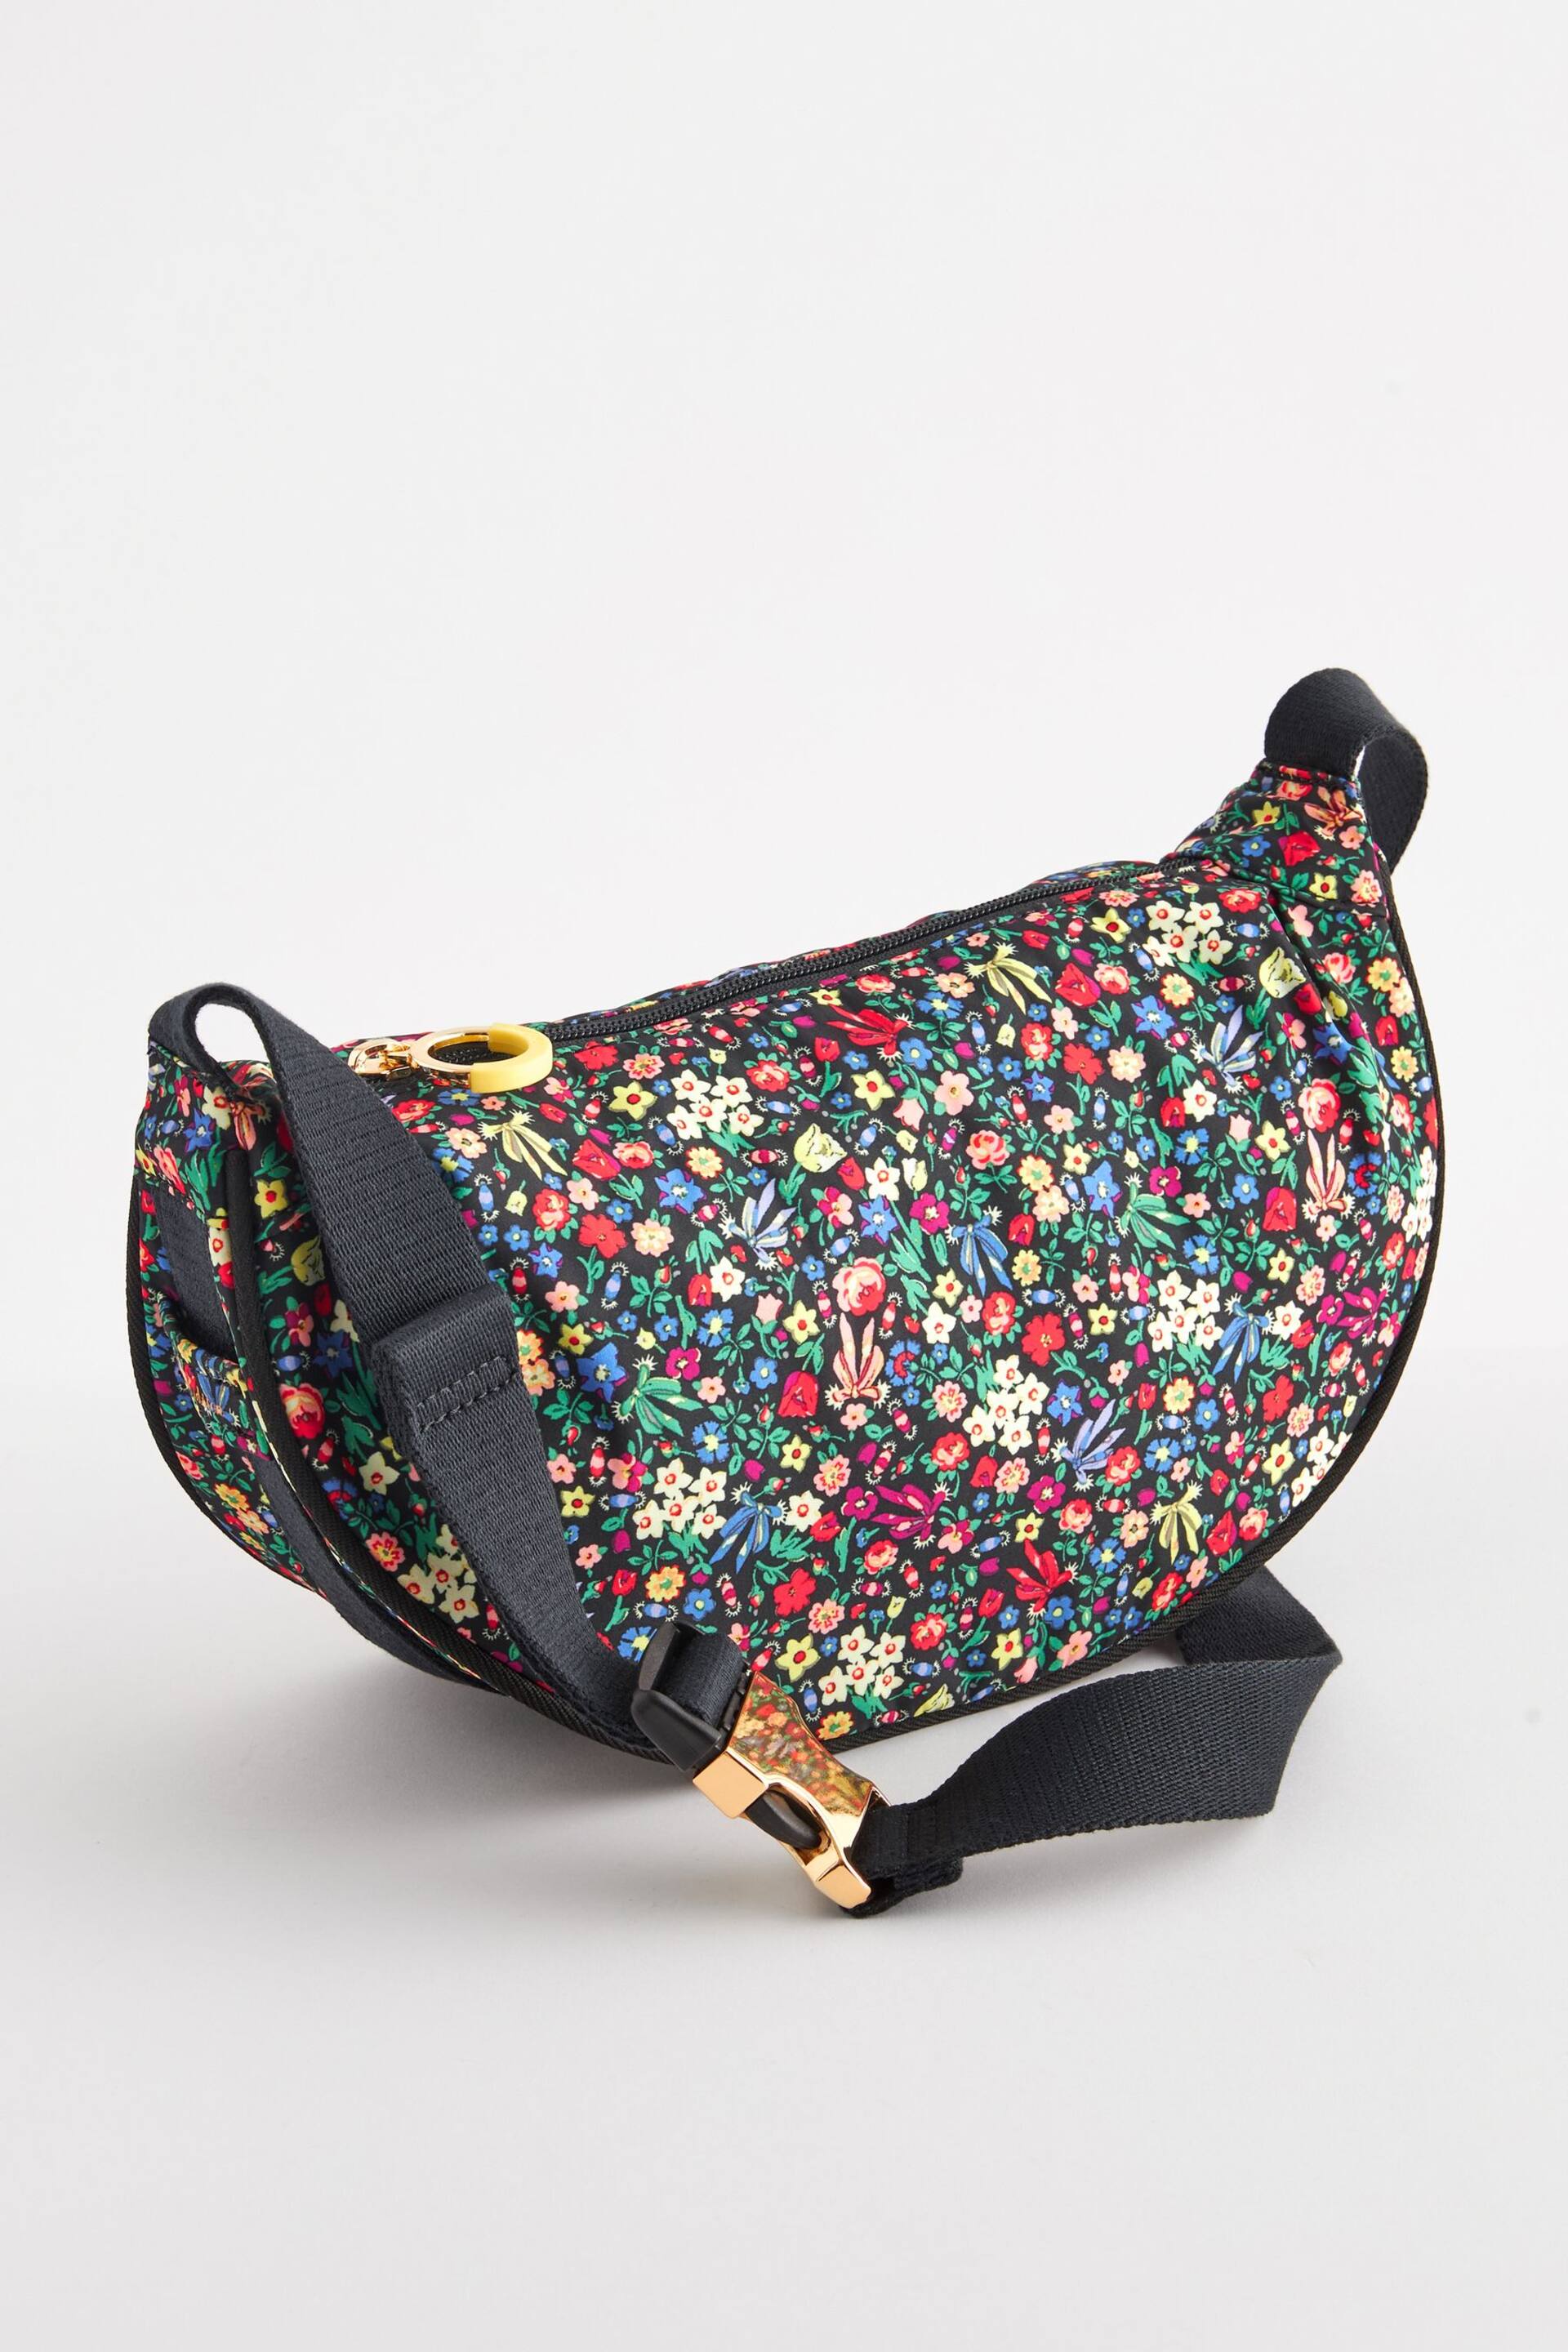 Cath Kidston Black Ditsy Floral Round Mini Shoulder Bag - Image 1 of 6